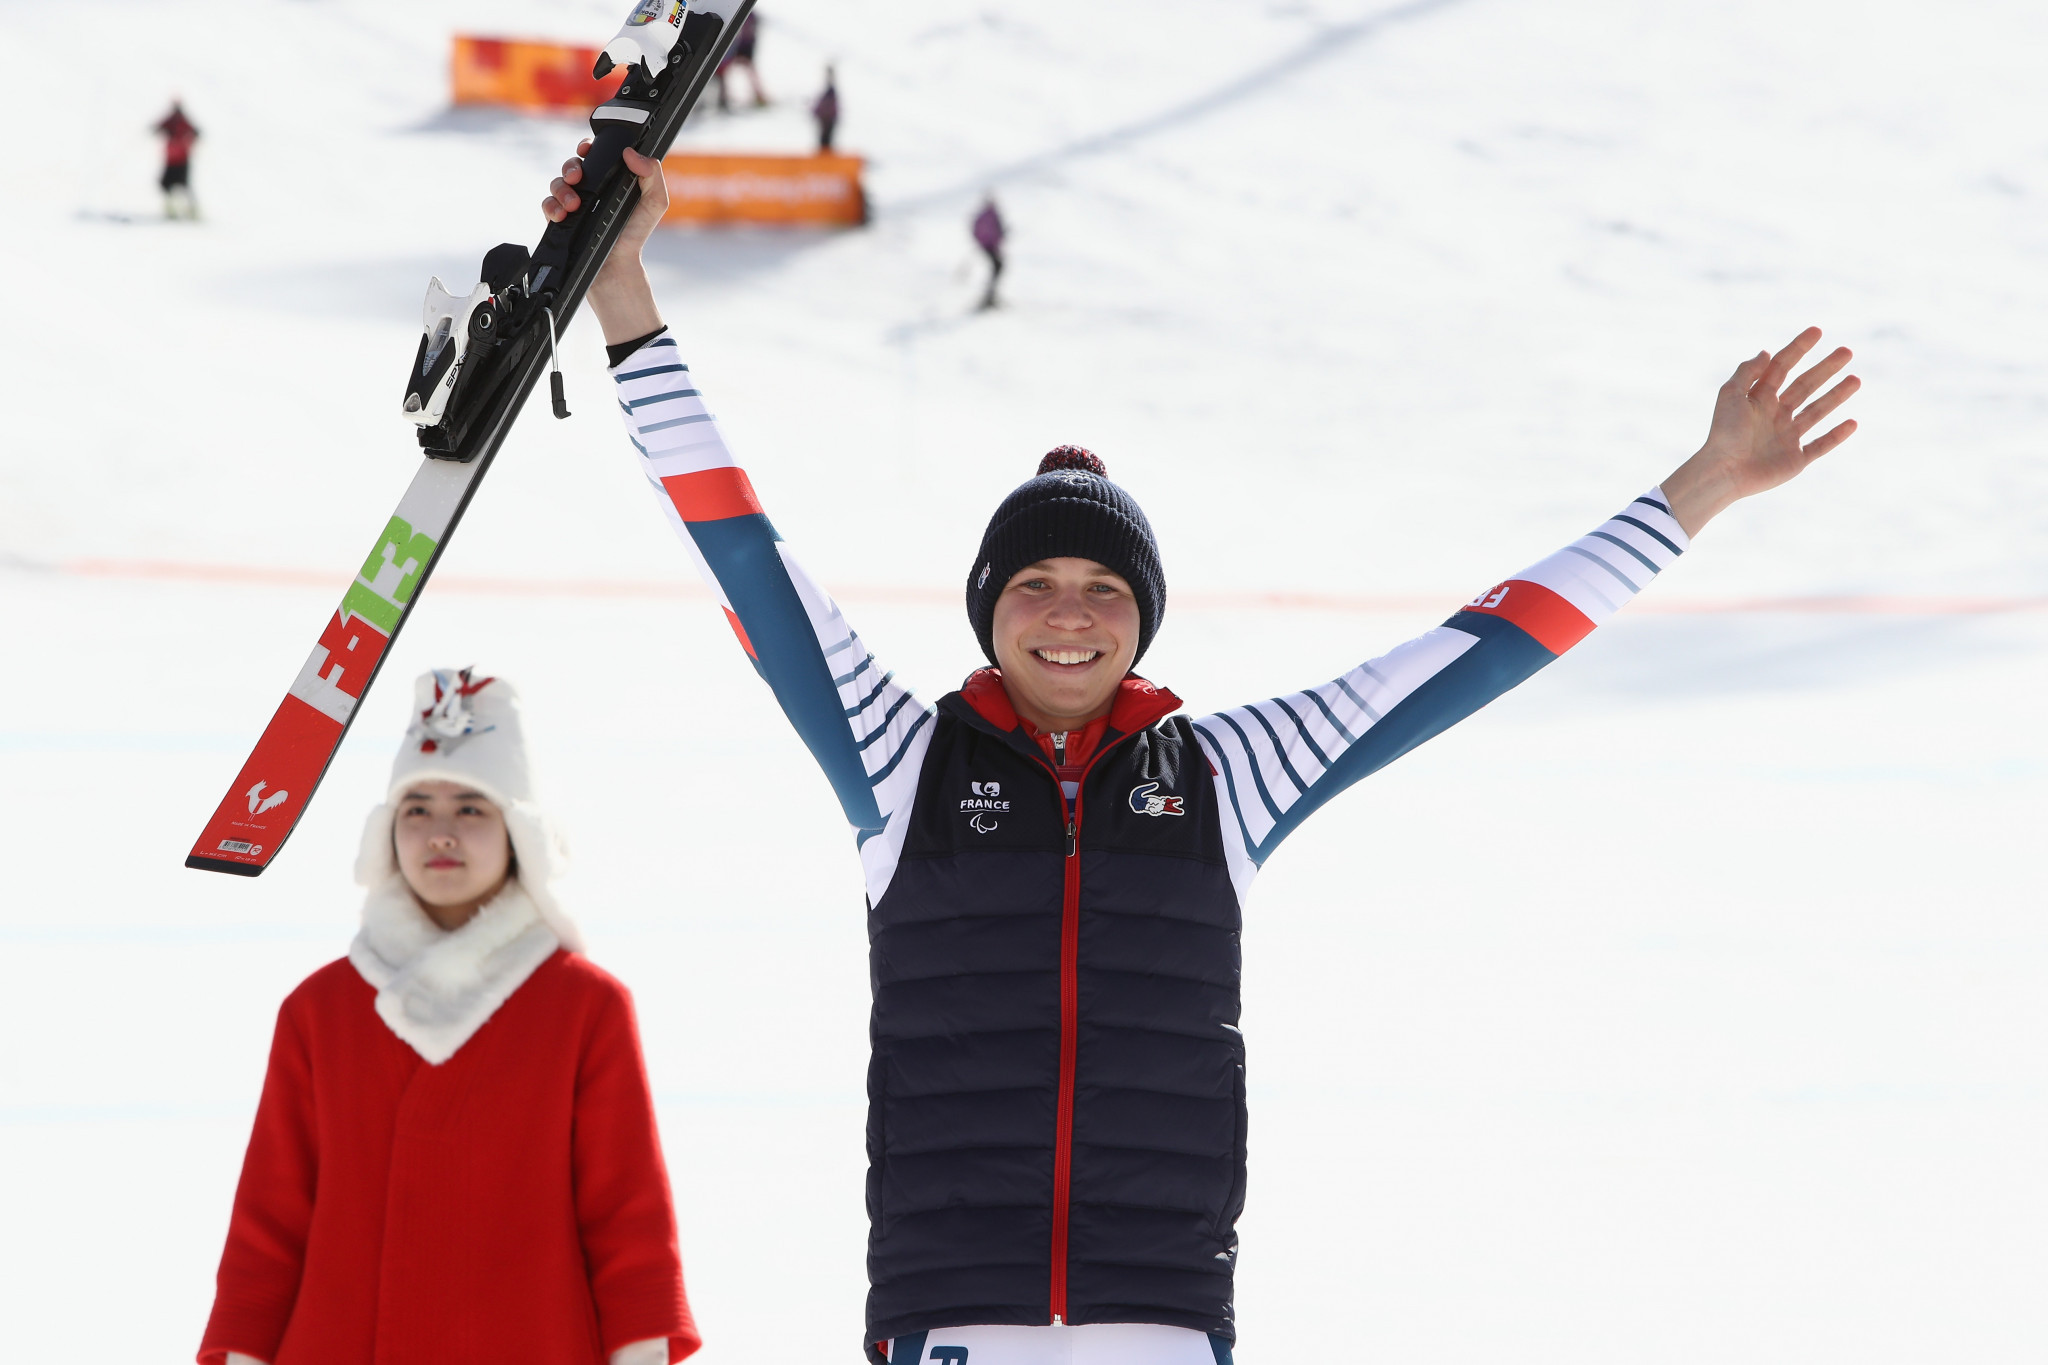 Bauchet starts World Para Alpine Skiing World Cup season with victory in Veysonnaz